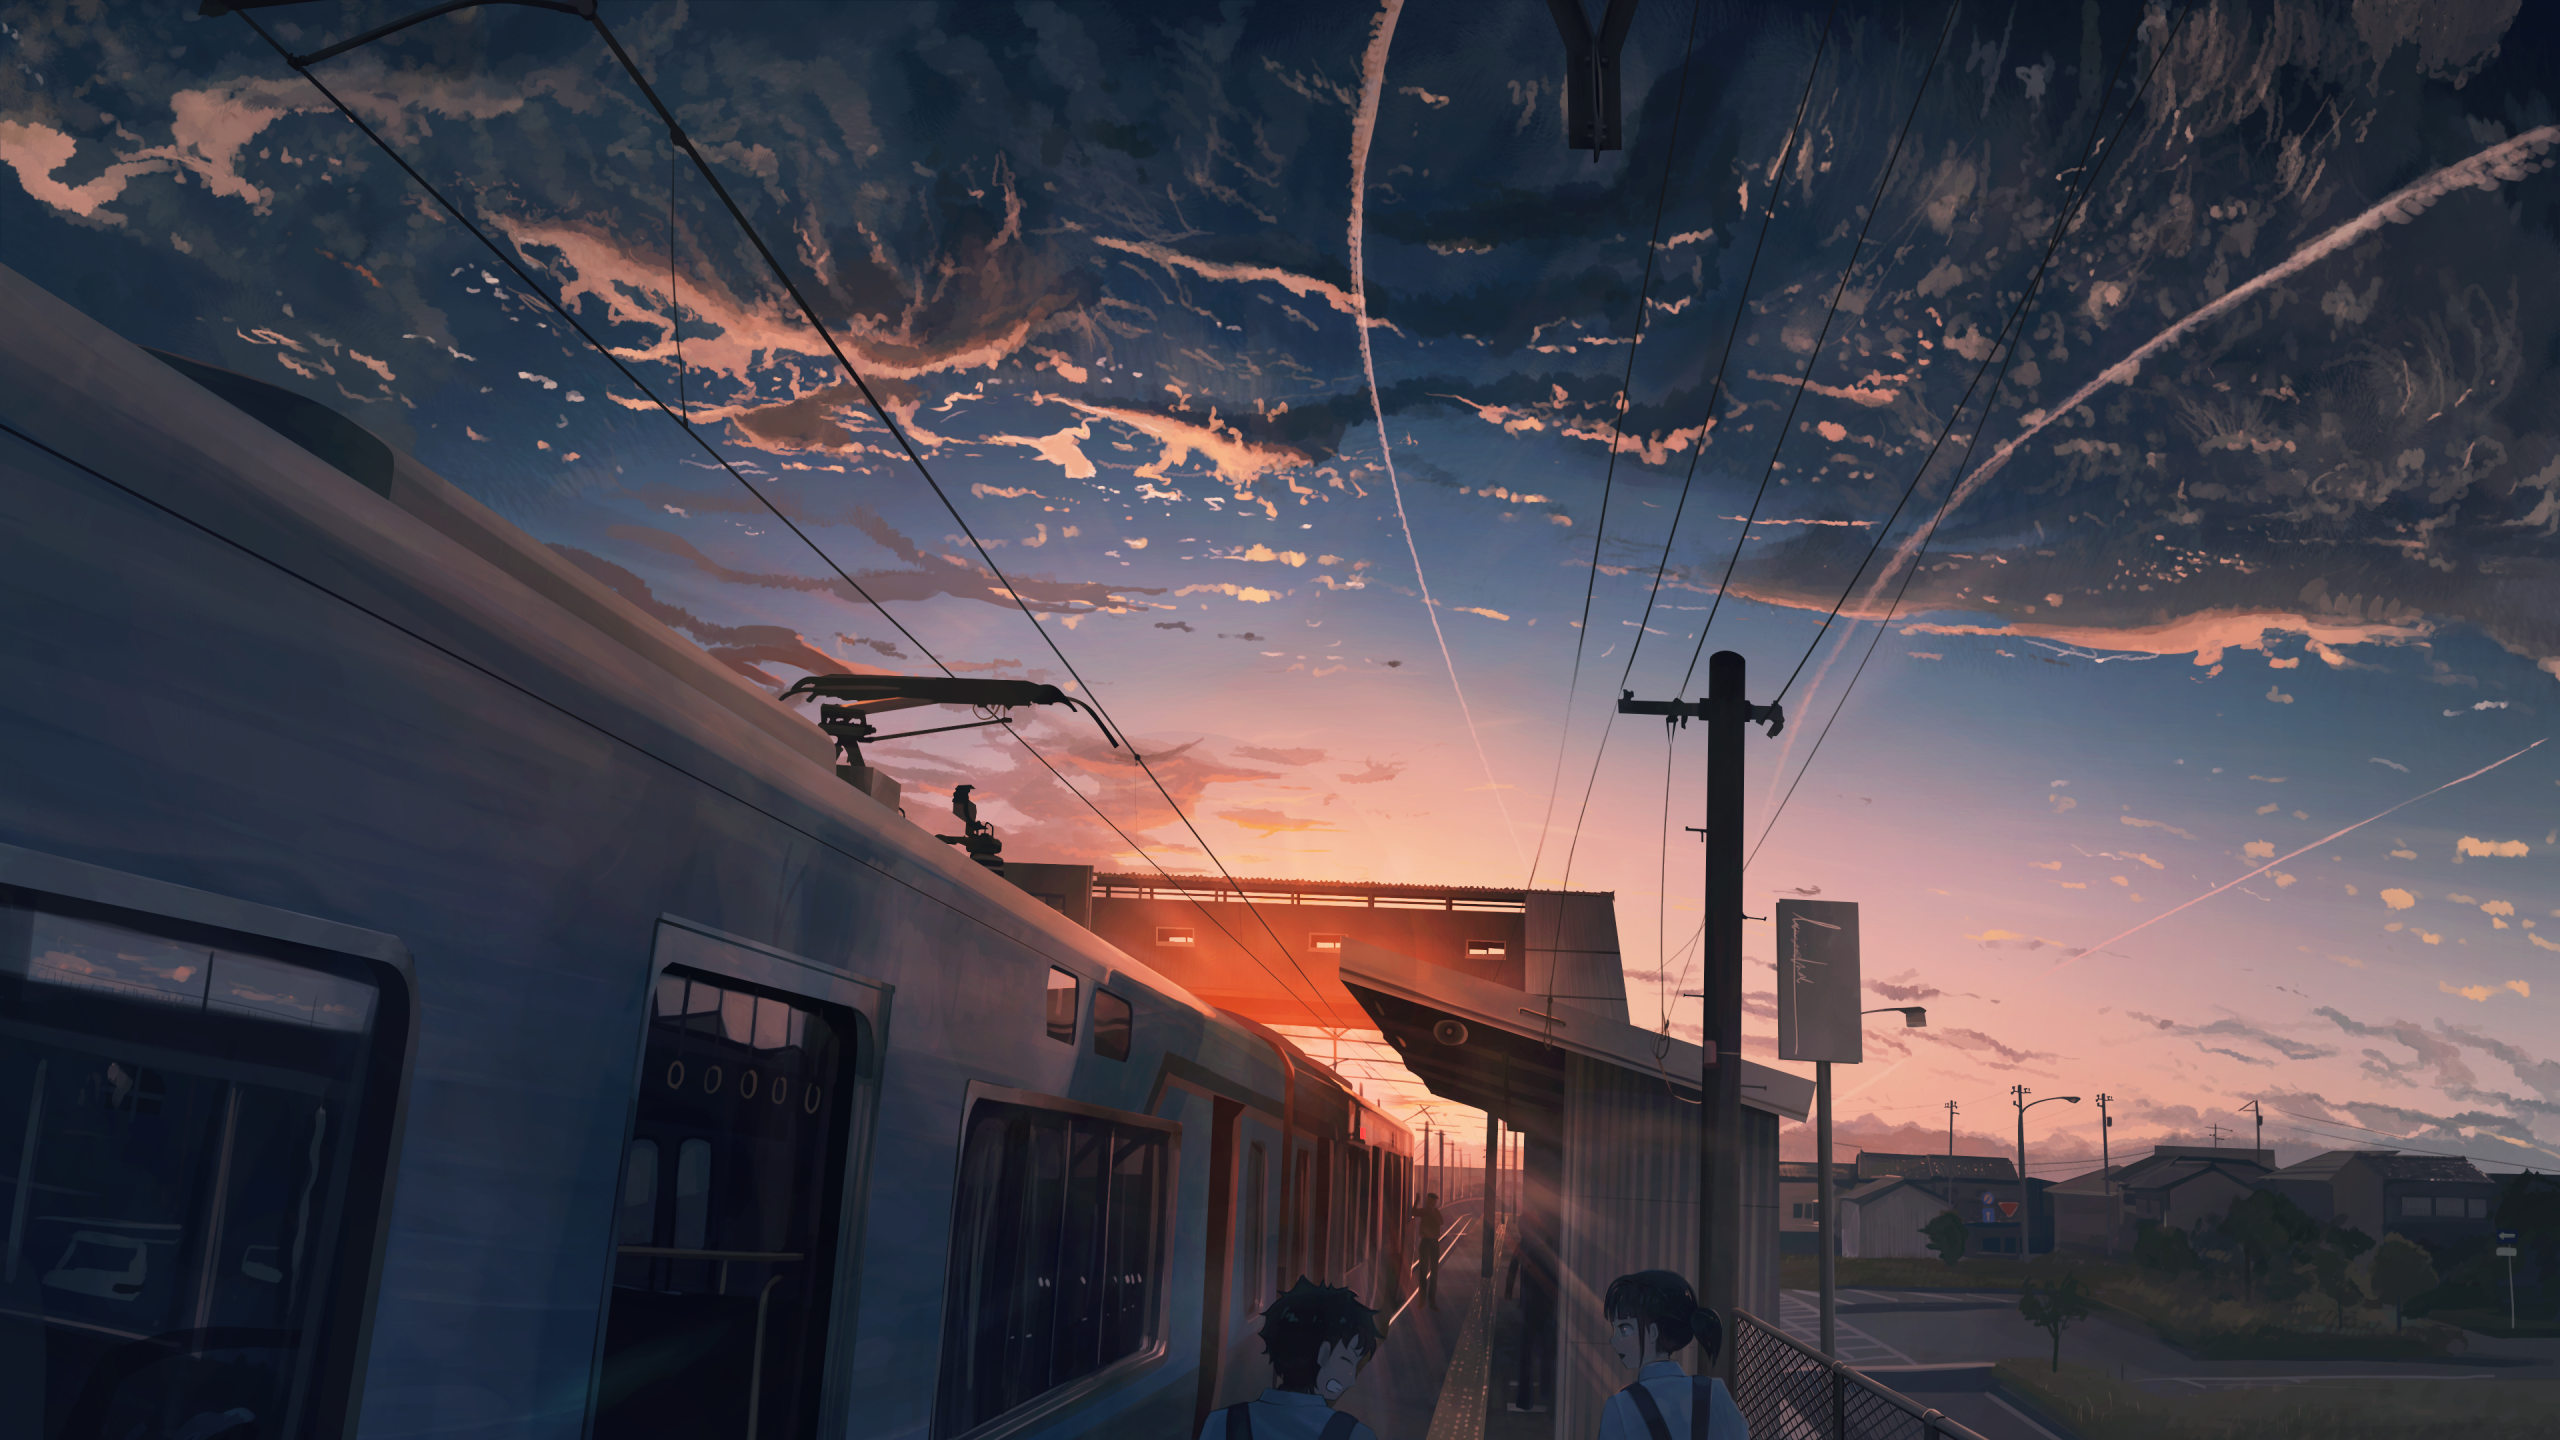 Anime Landscape, Sunset, Train, Clouds, Scenic, Fence - Anime Wallpaper  Train - 2560x1440 Wallpaper 